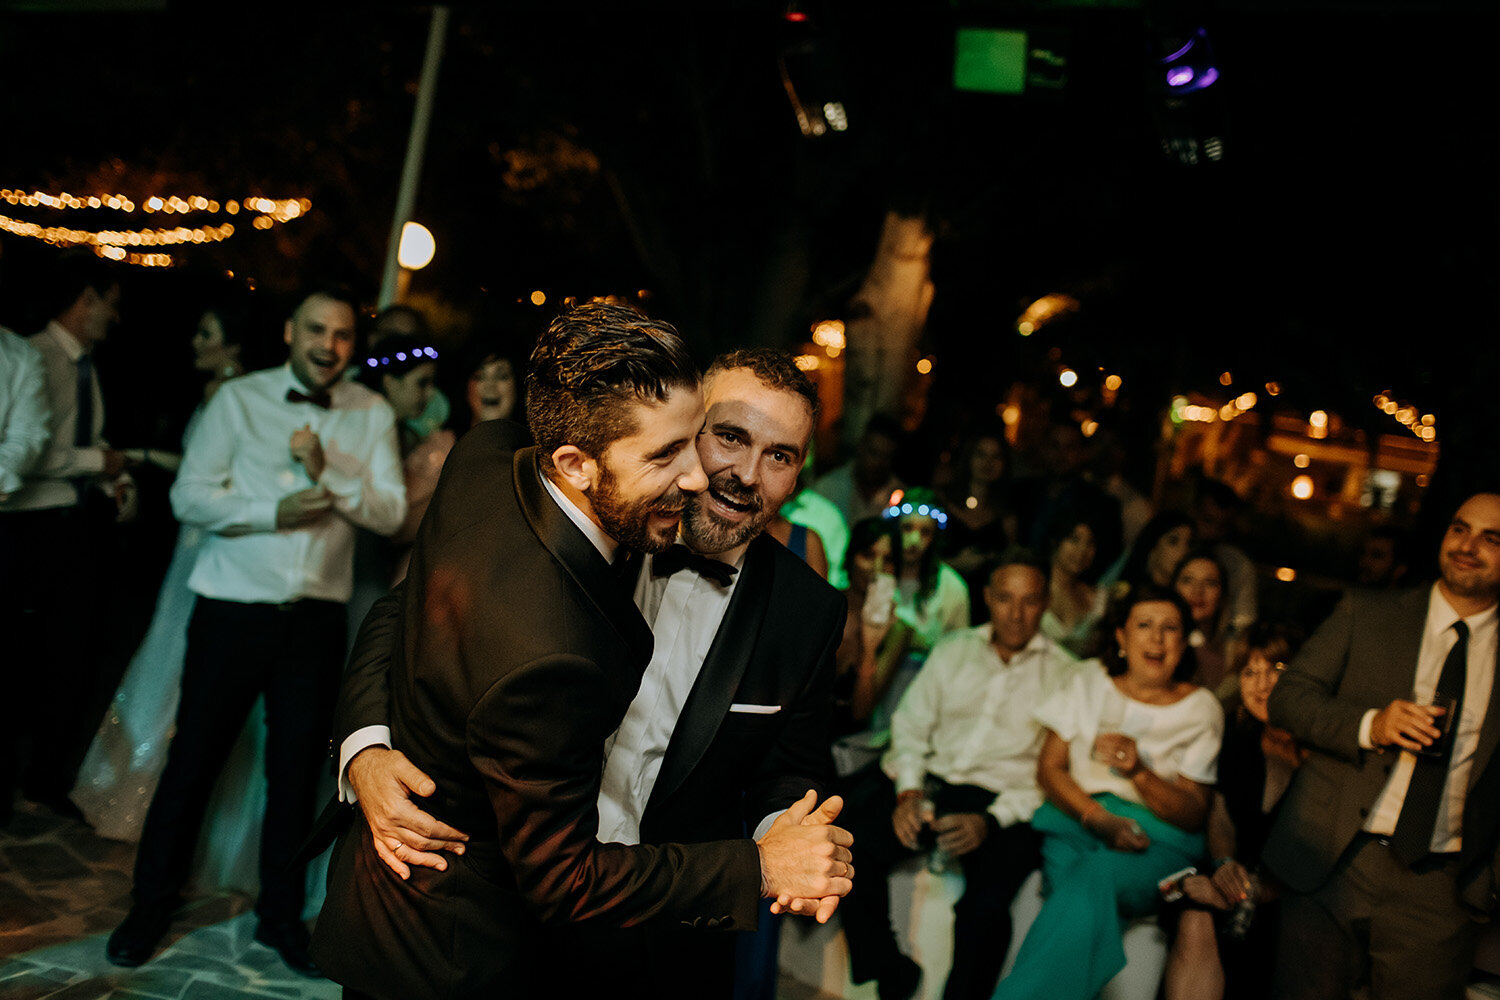 107_Jose_Reyes_boda_pareja_gay_lgtb_wedding_chicos_Zaragoza_Granada_love_forografo_bodas.jpg